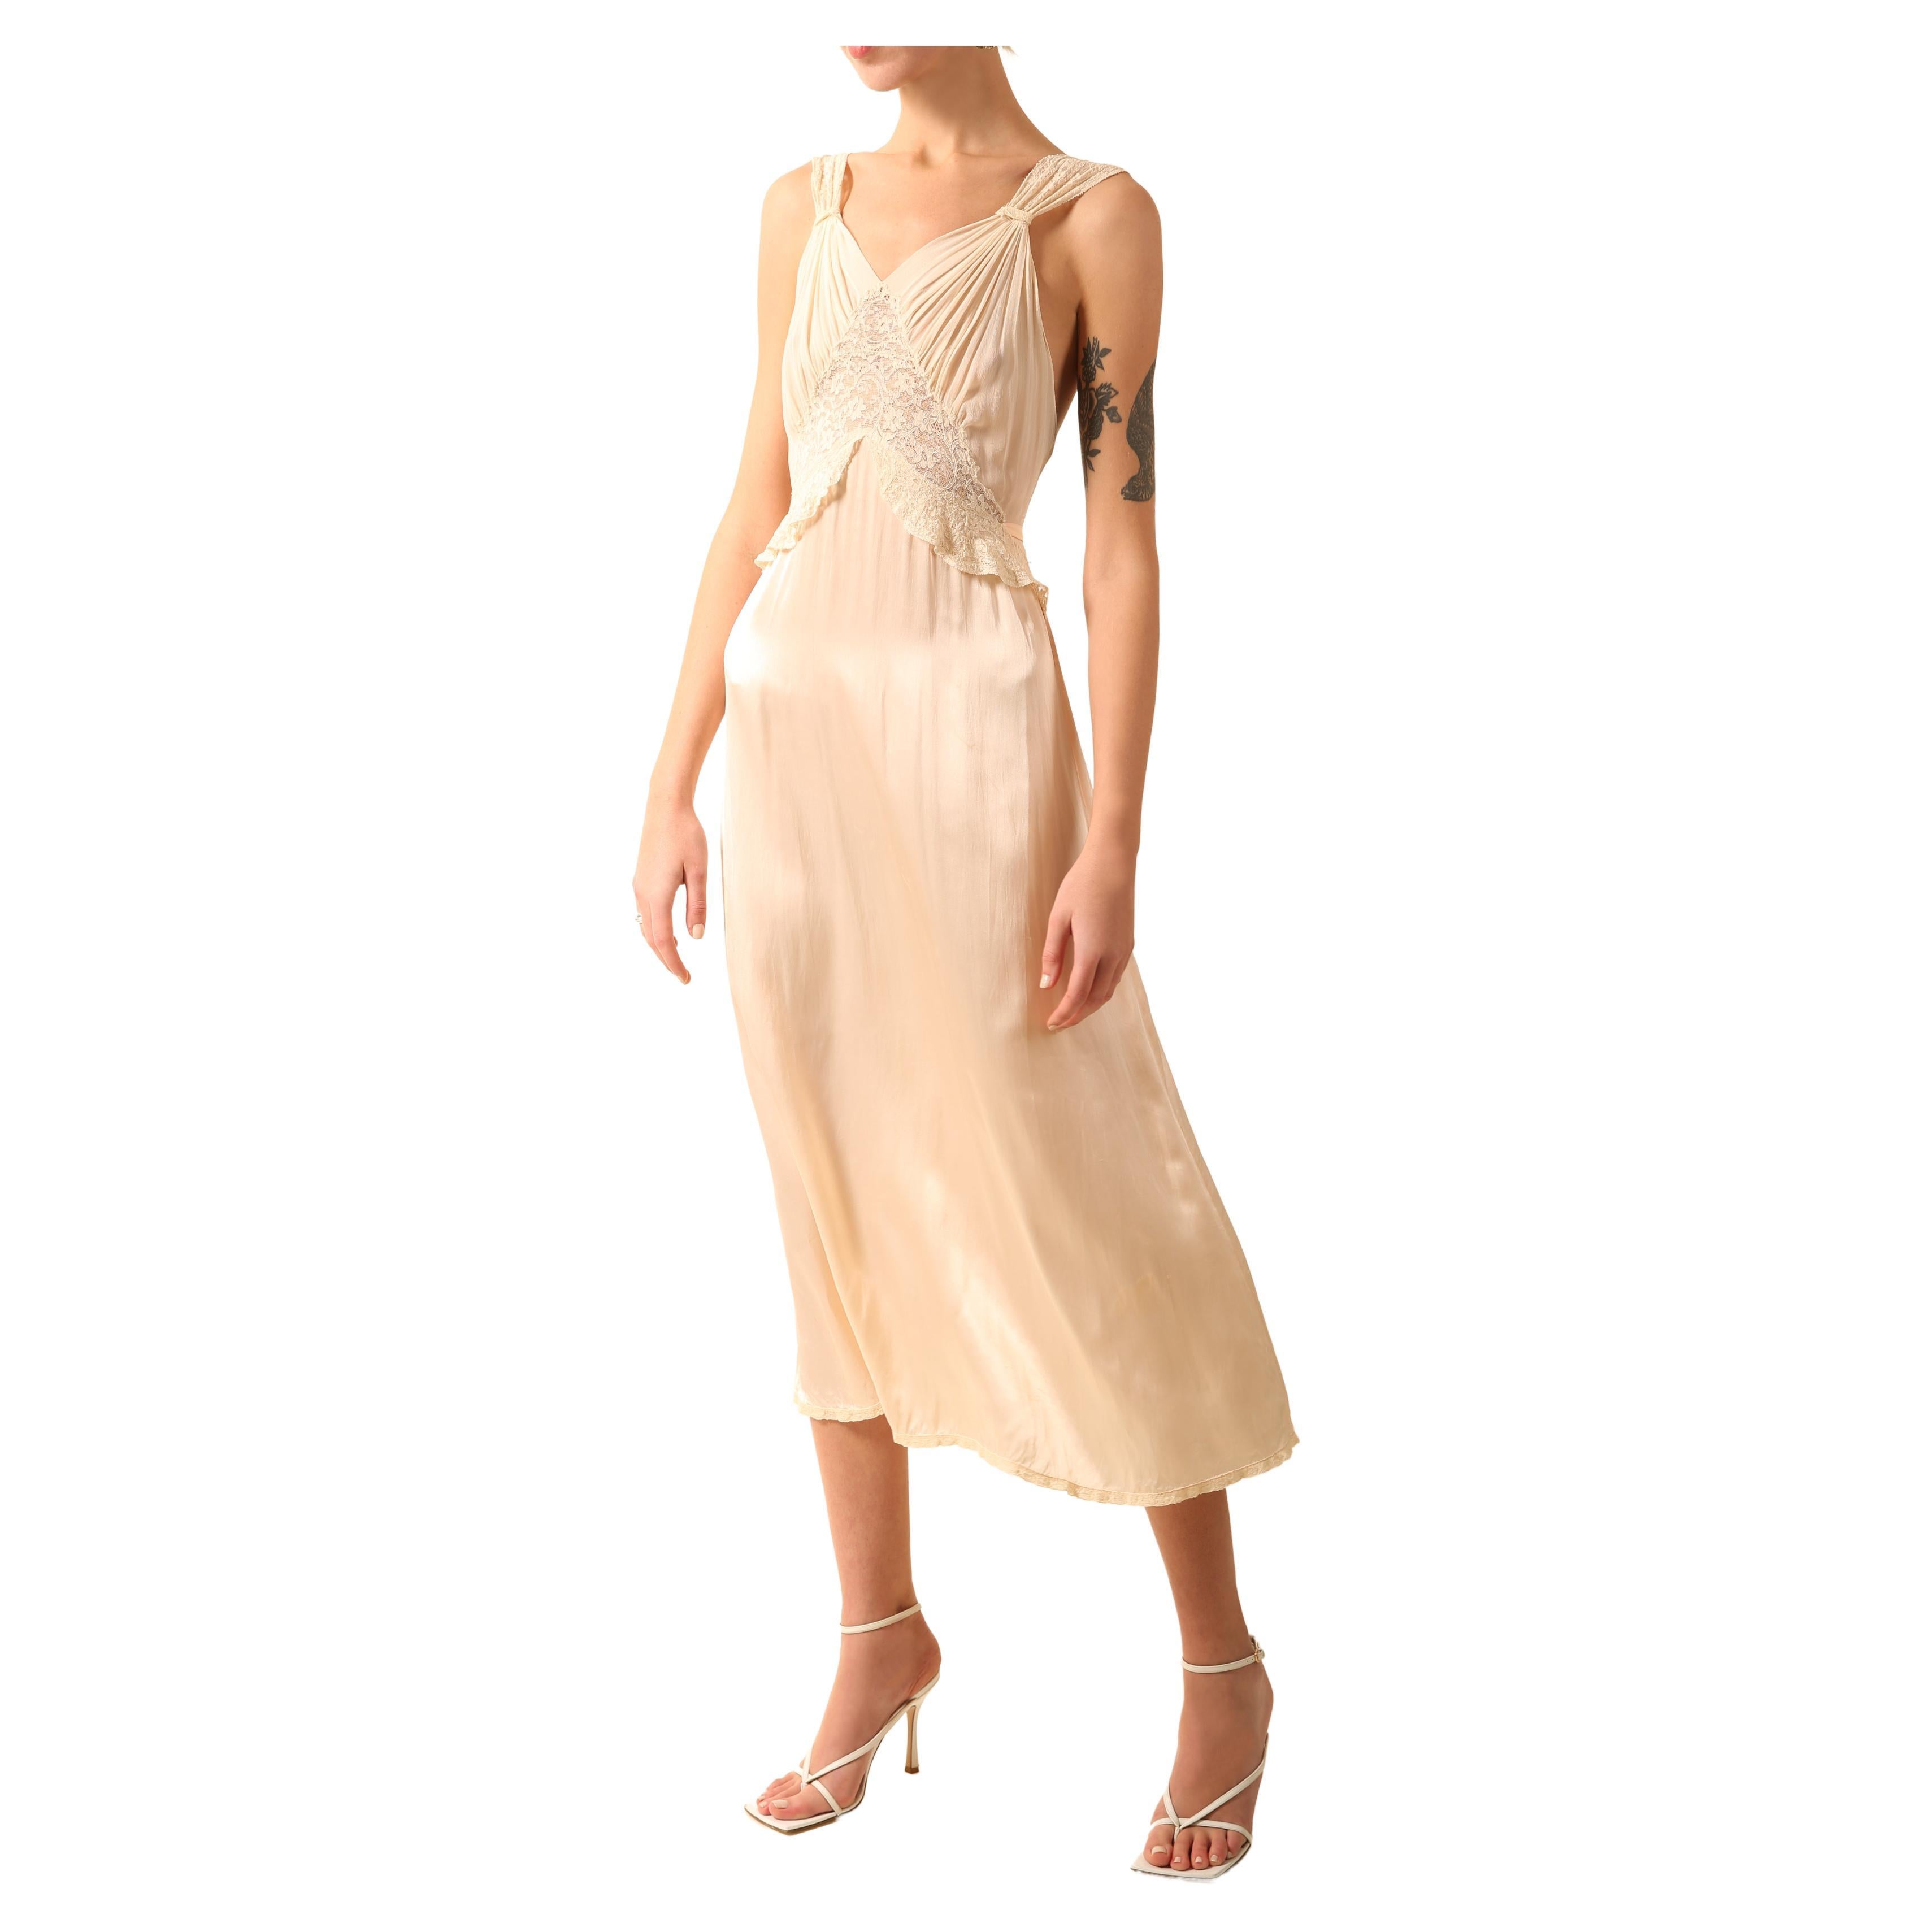 Vintage pink ivory silk chiffon lace sheer robe night gown midi slip dress XS-S